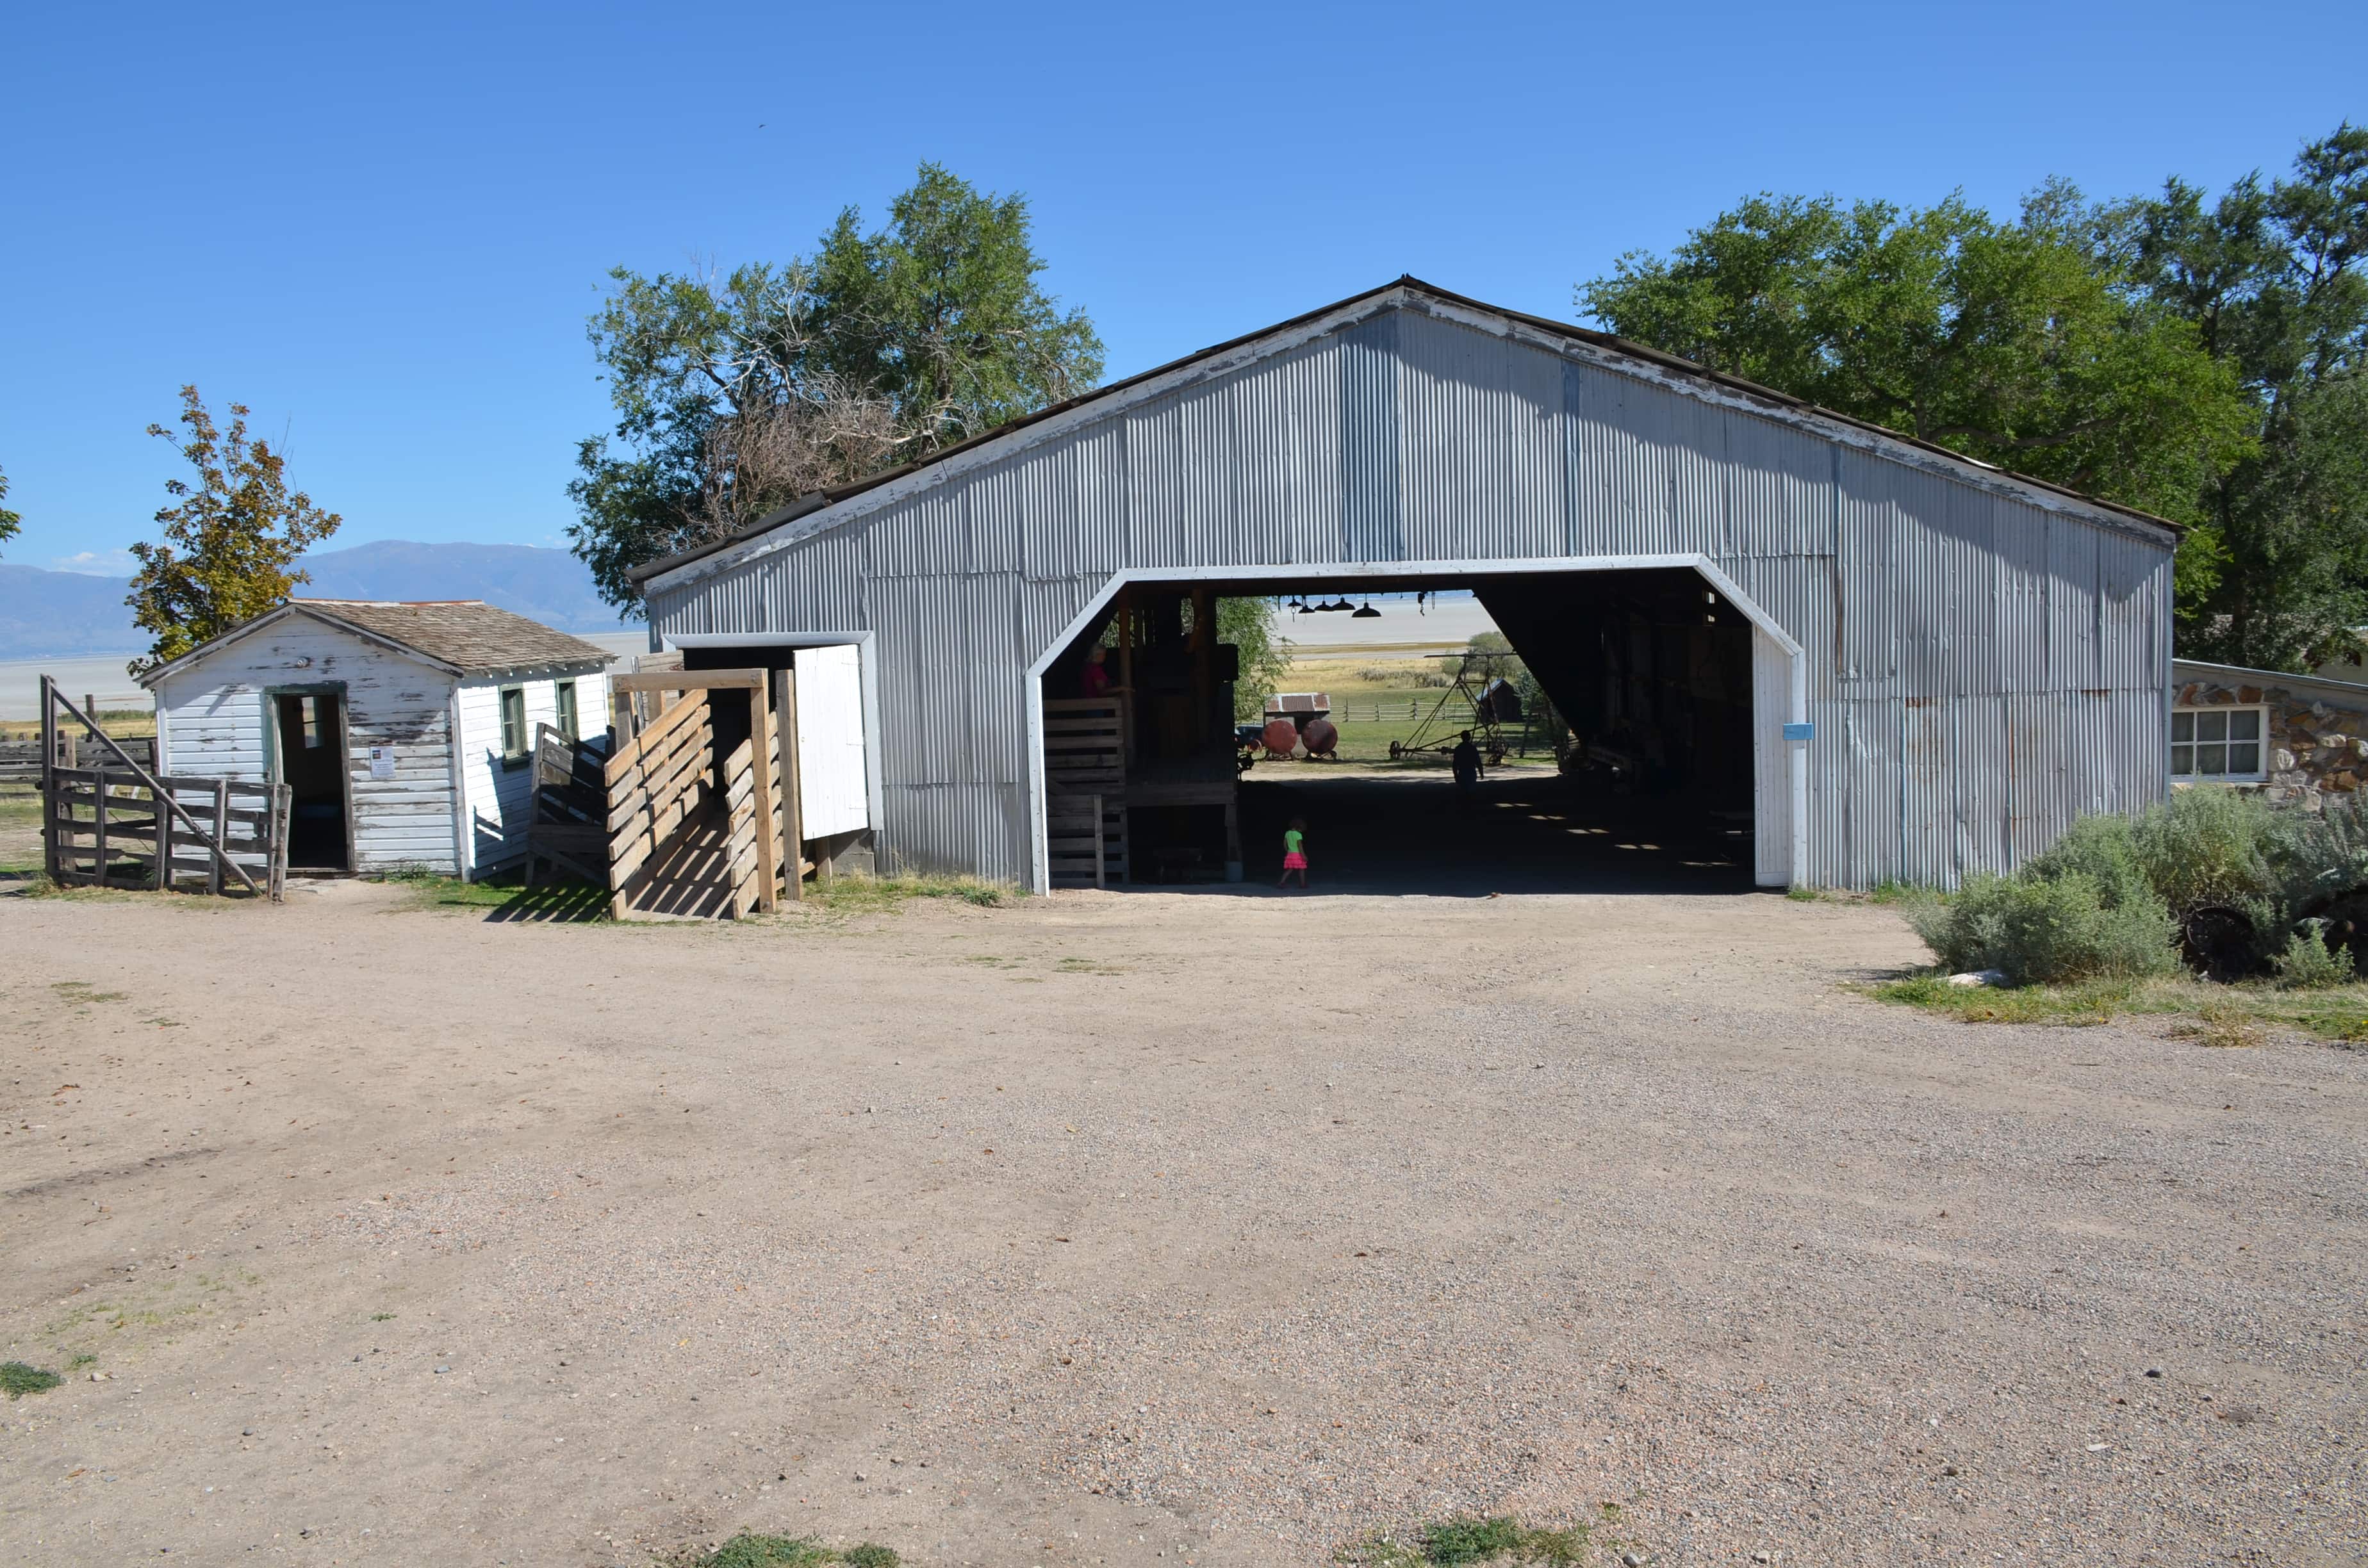 Barn at Fielding Garr Ranch at Antelope Island State Park in Utah